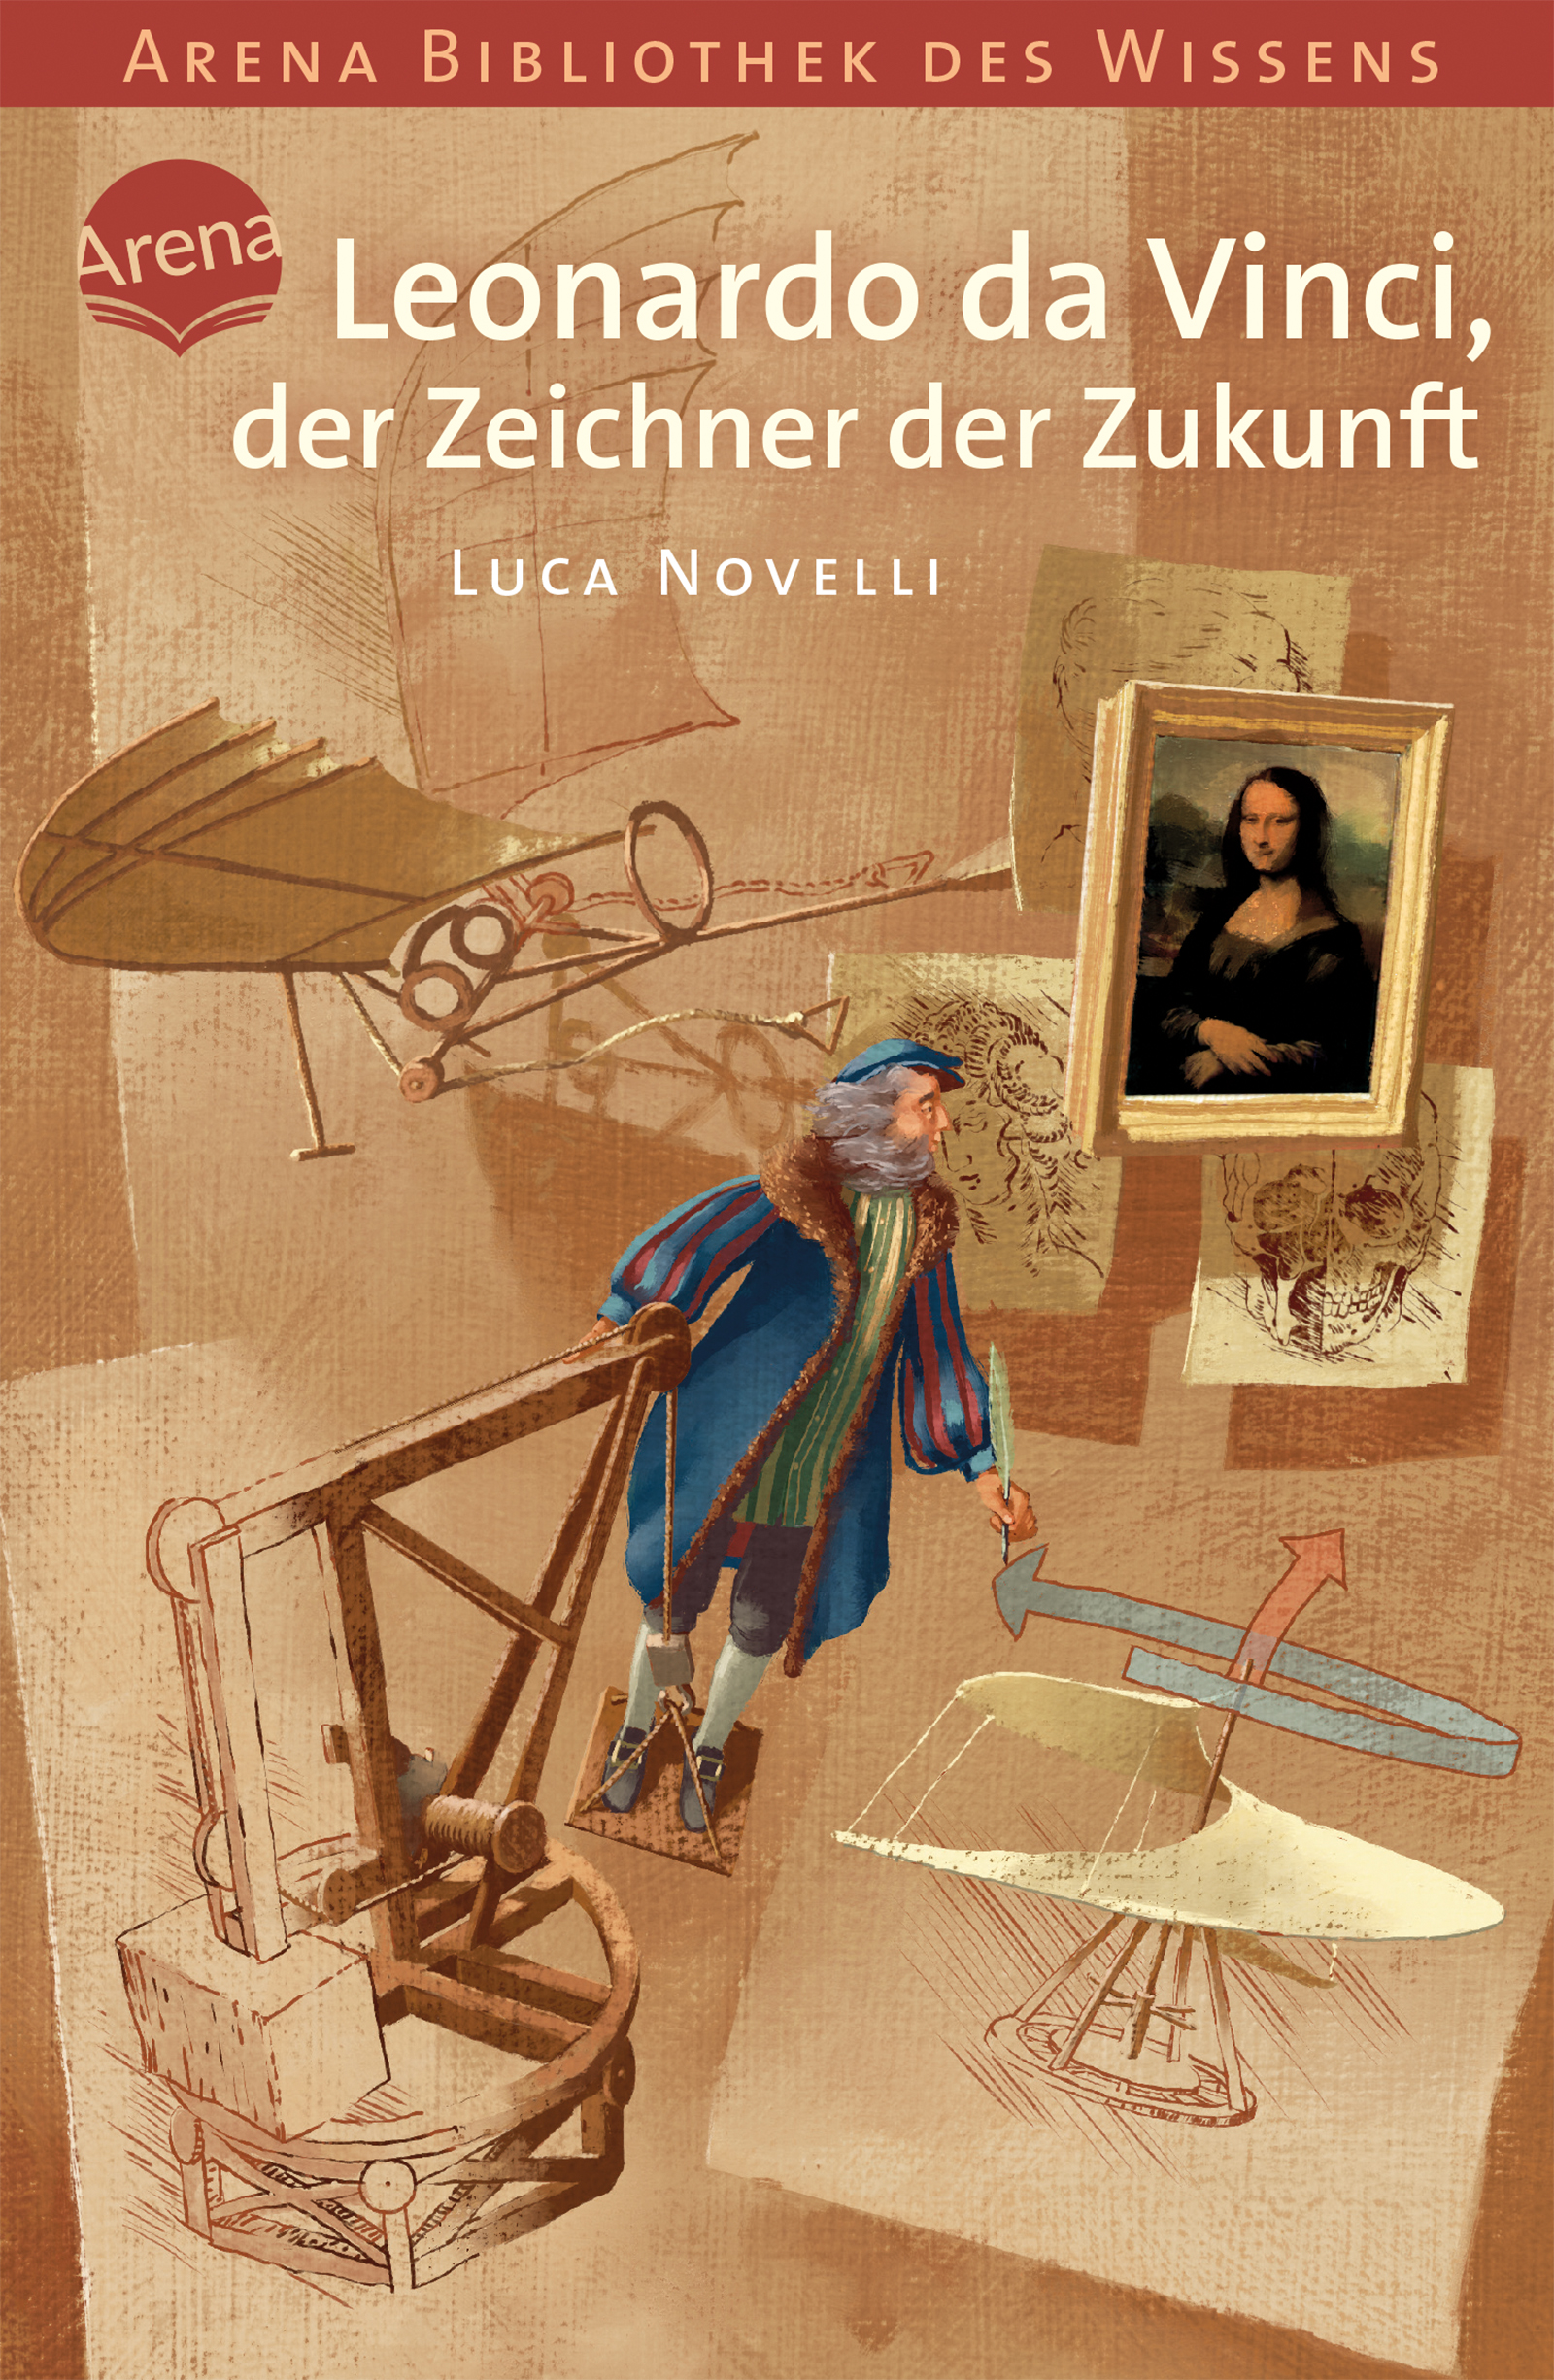 Cover in Druckqualität